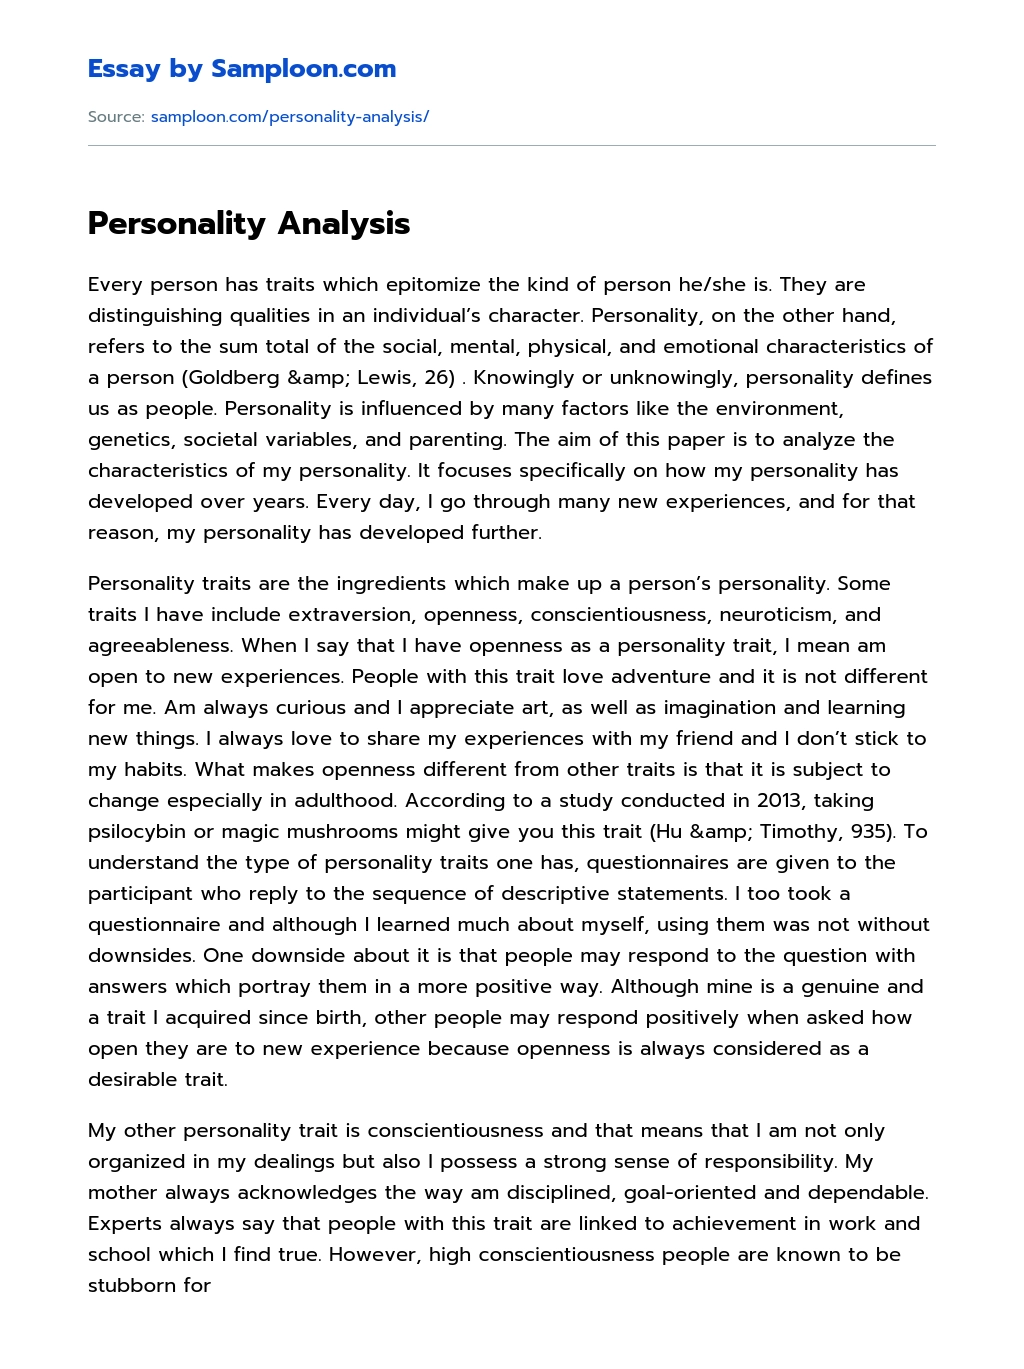 Personality Analysis essay